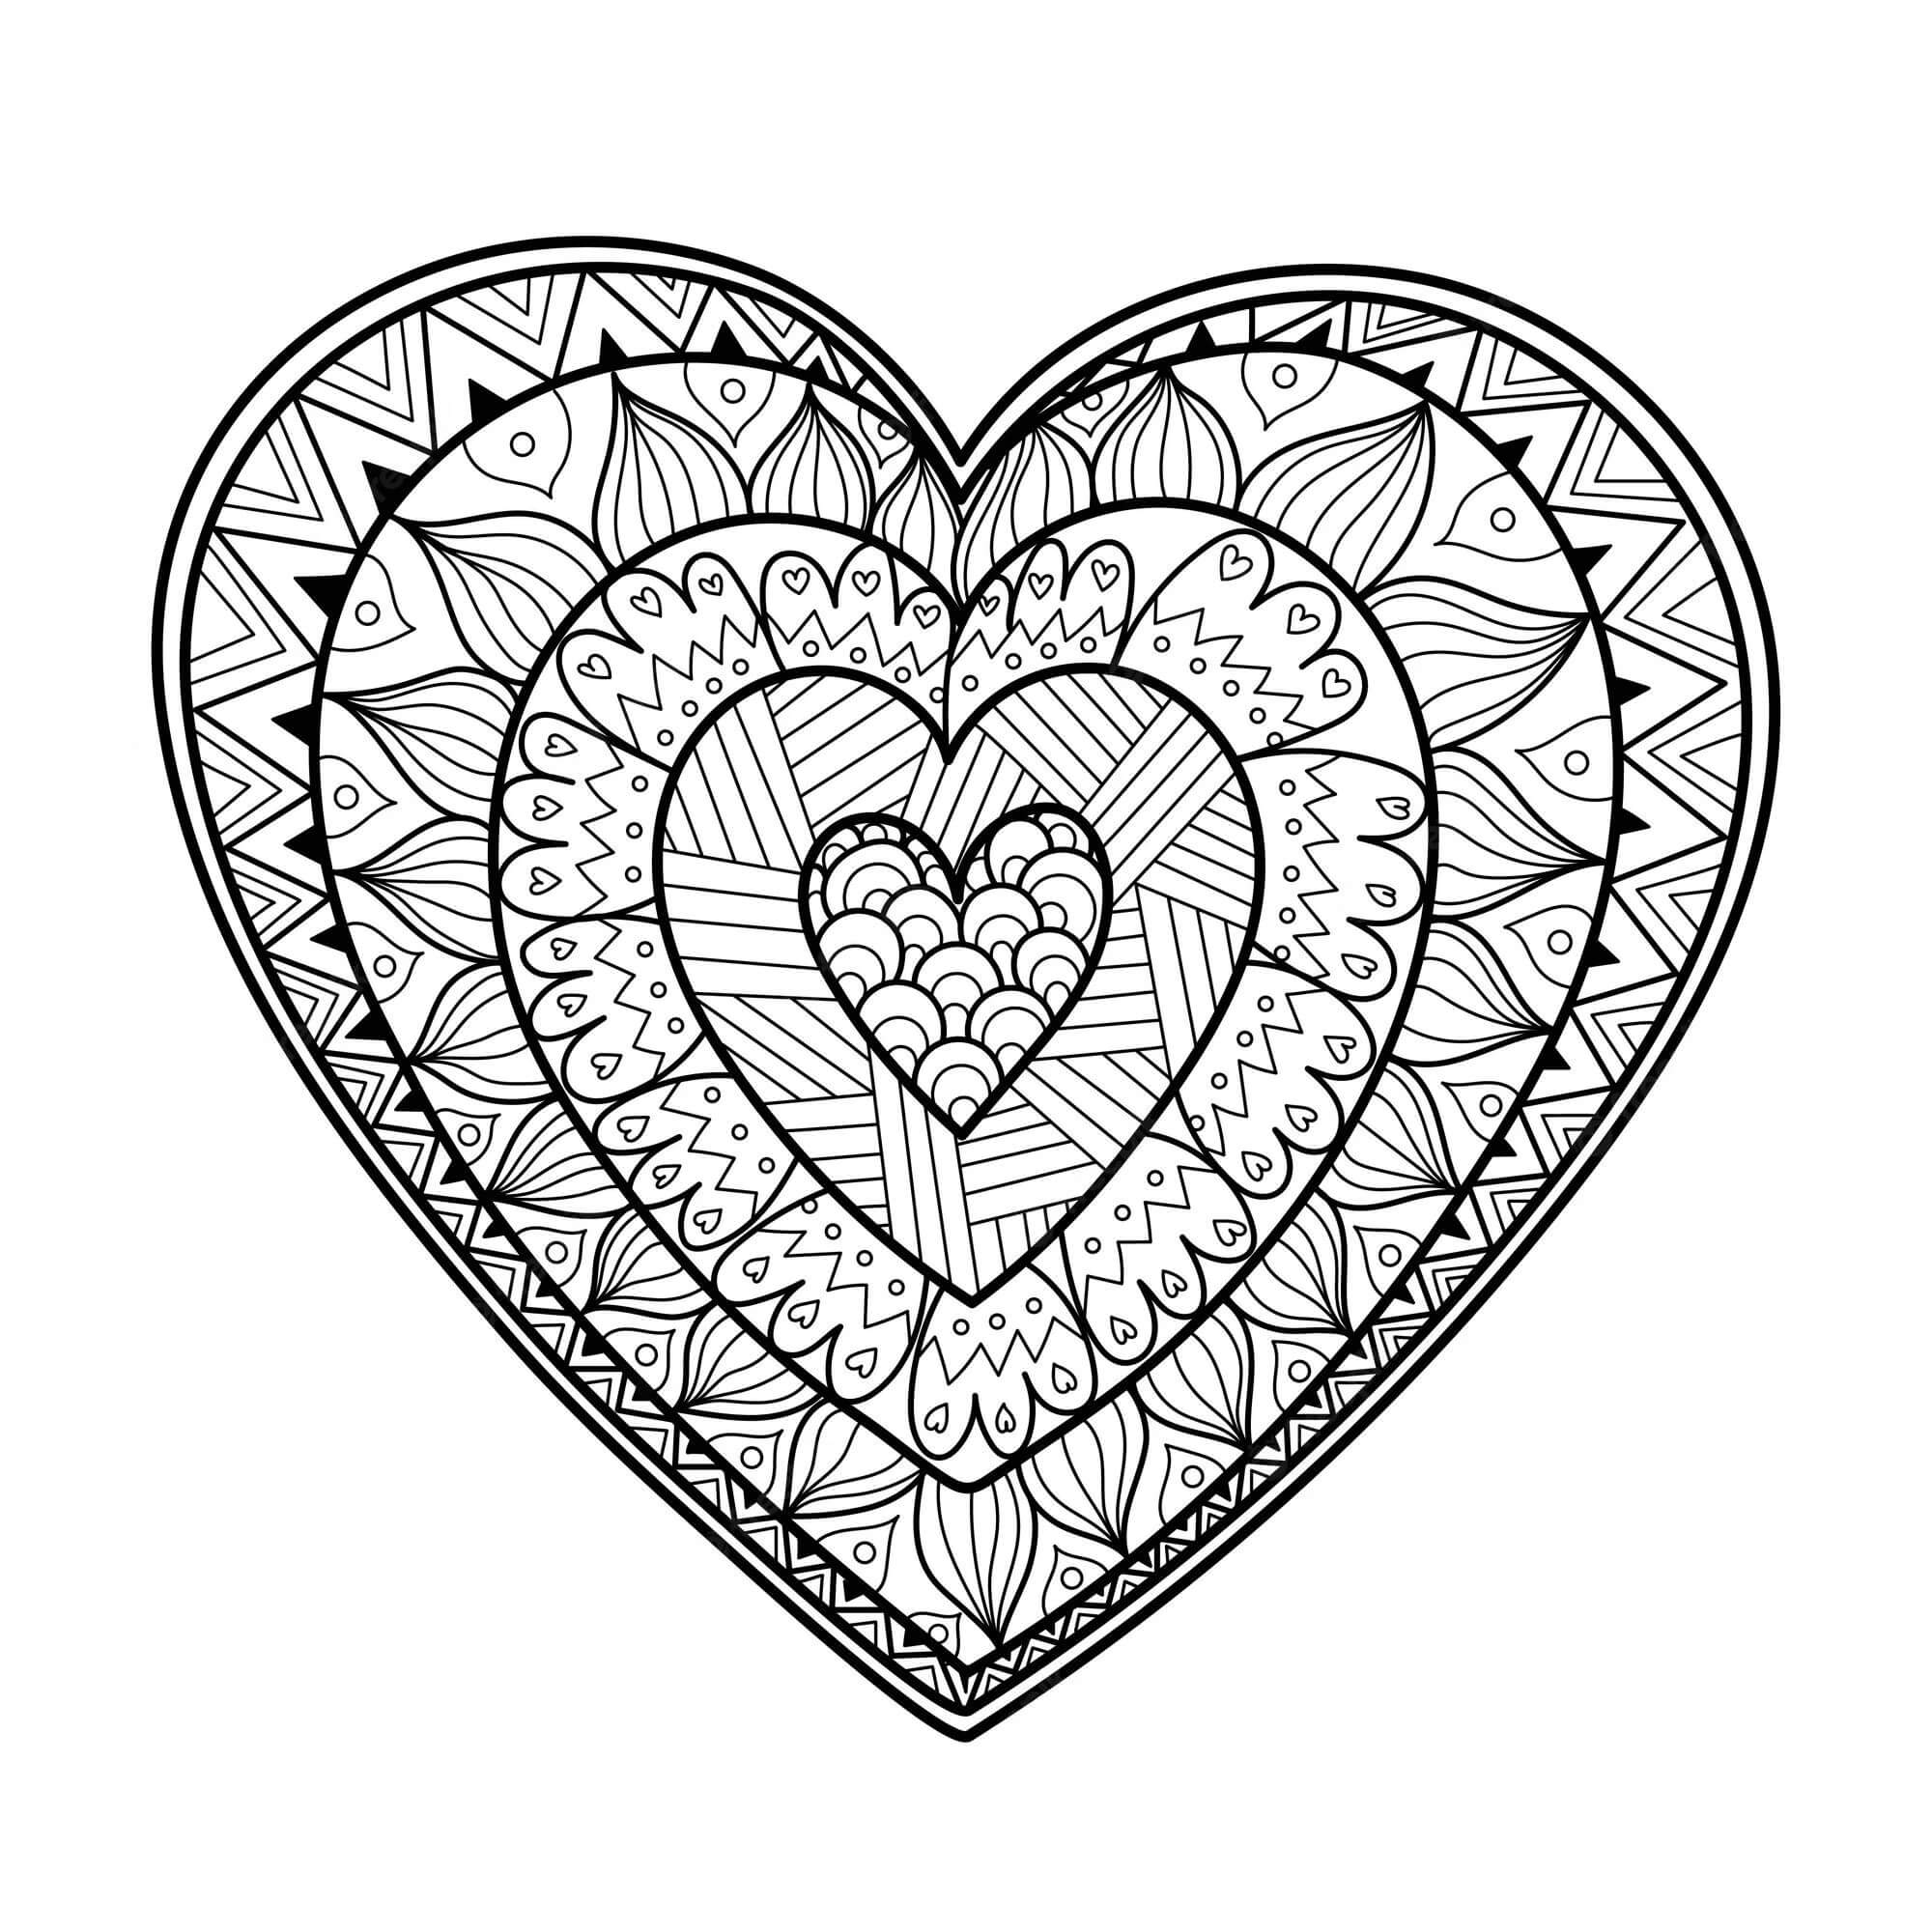 Mandala Heart Coloring Page - Sheet 1 Mandalas